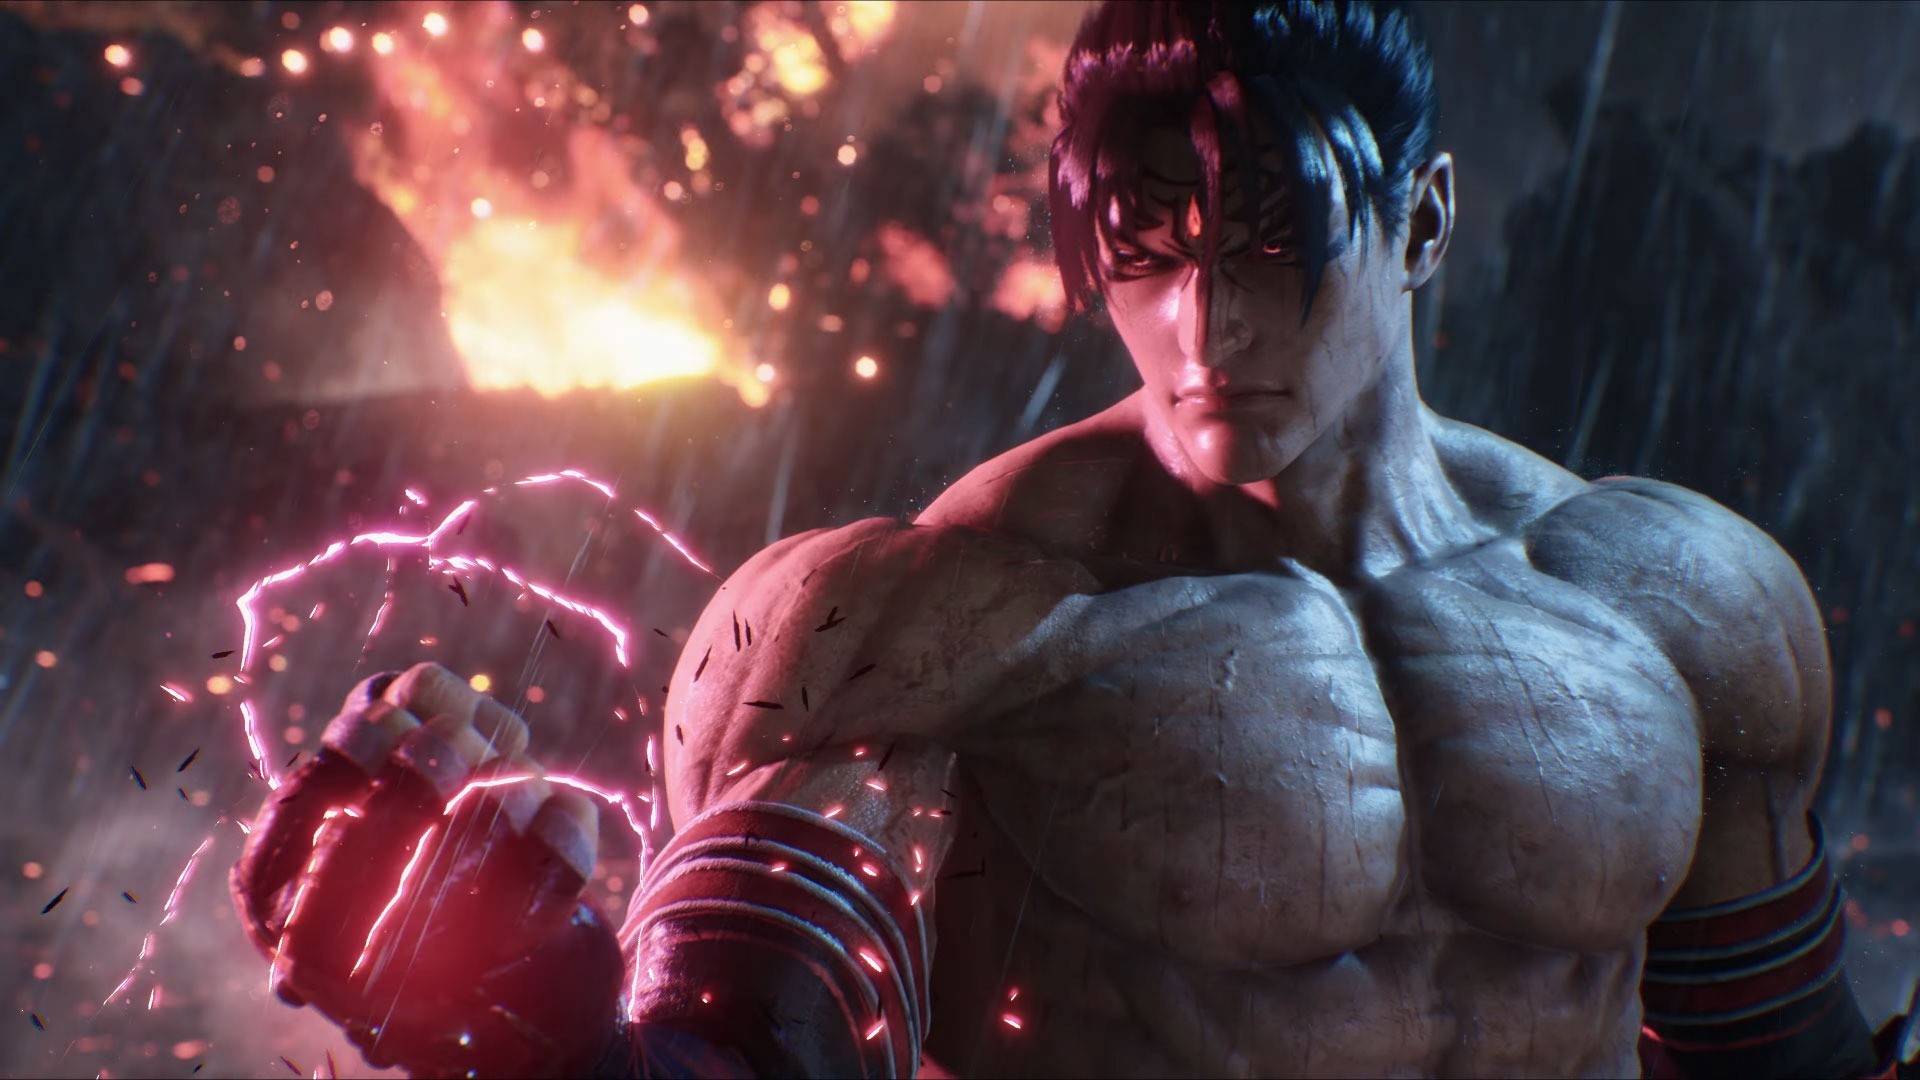 Tekken 8: novo vídeo compara modelos de personagens com os de Tekken 7 -  Adrenaline